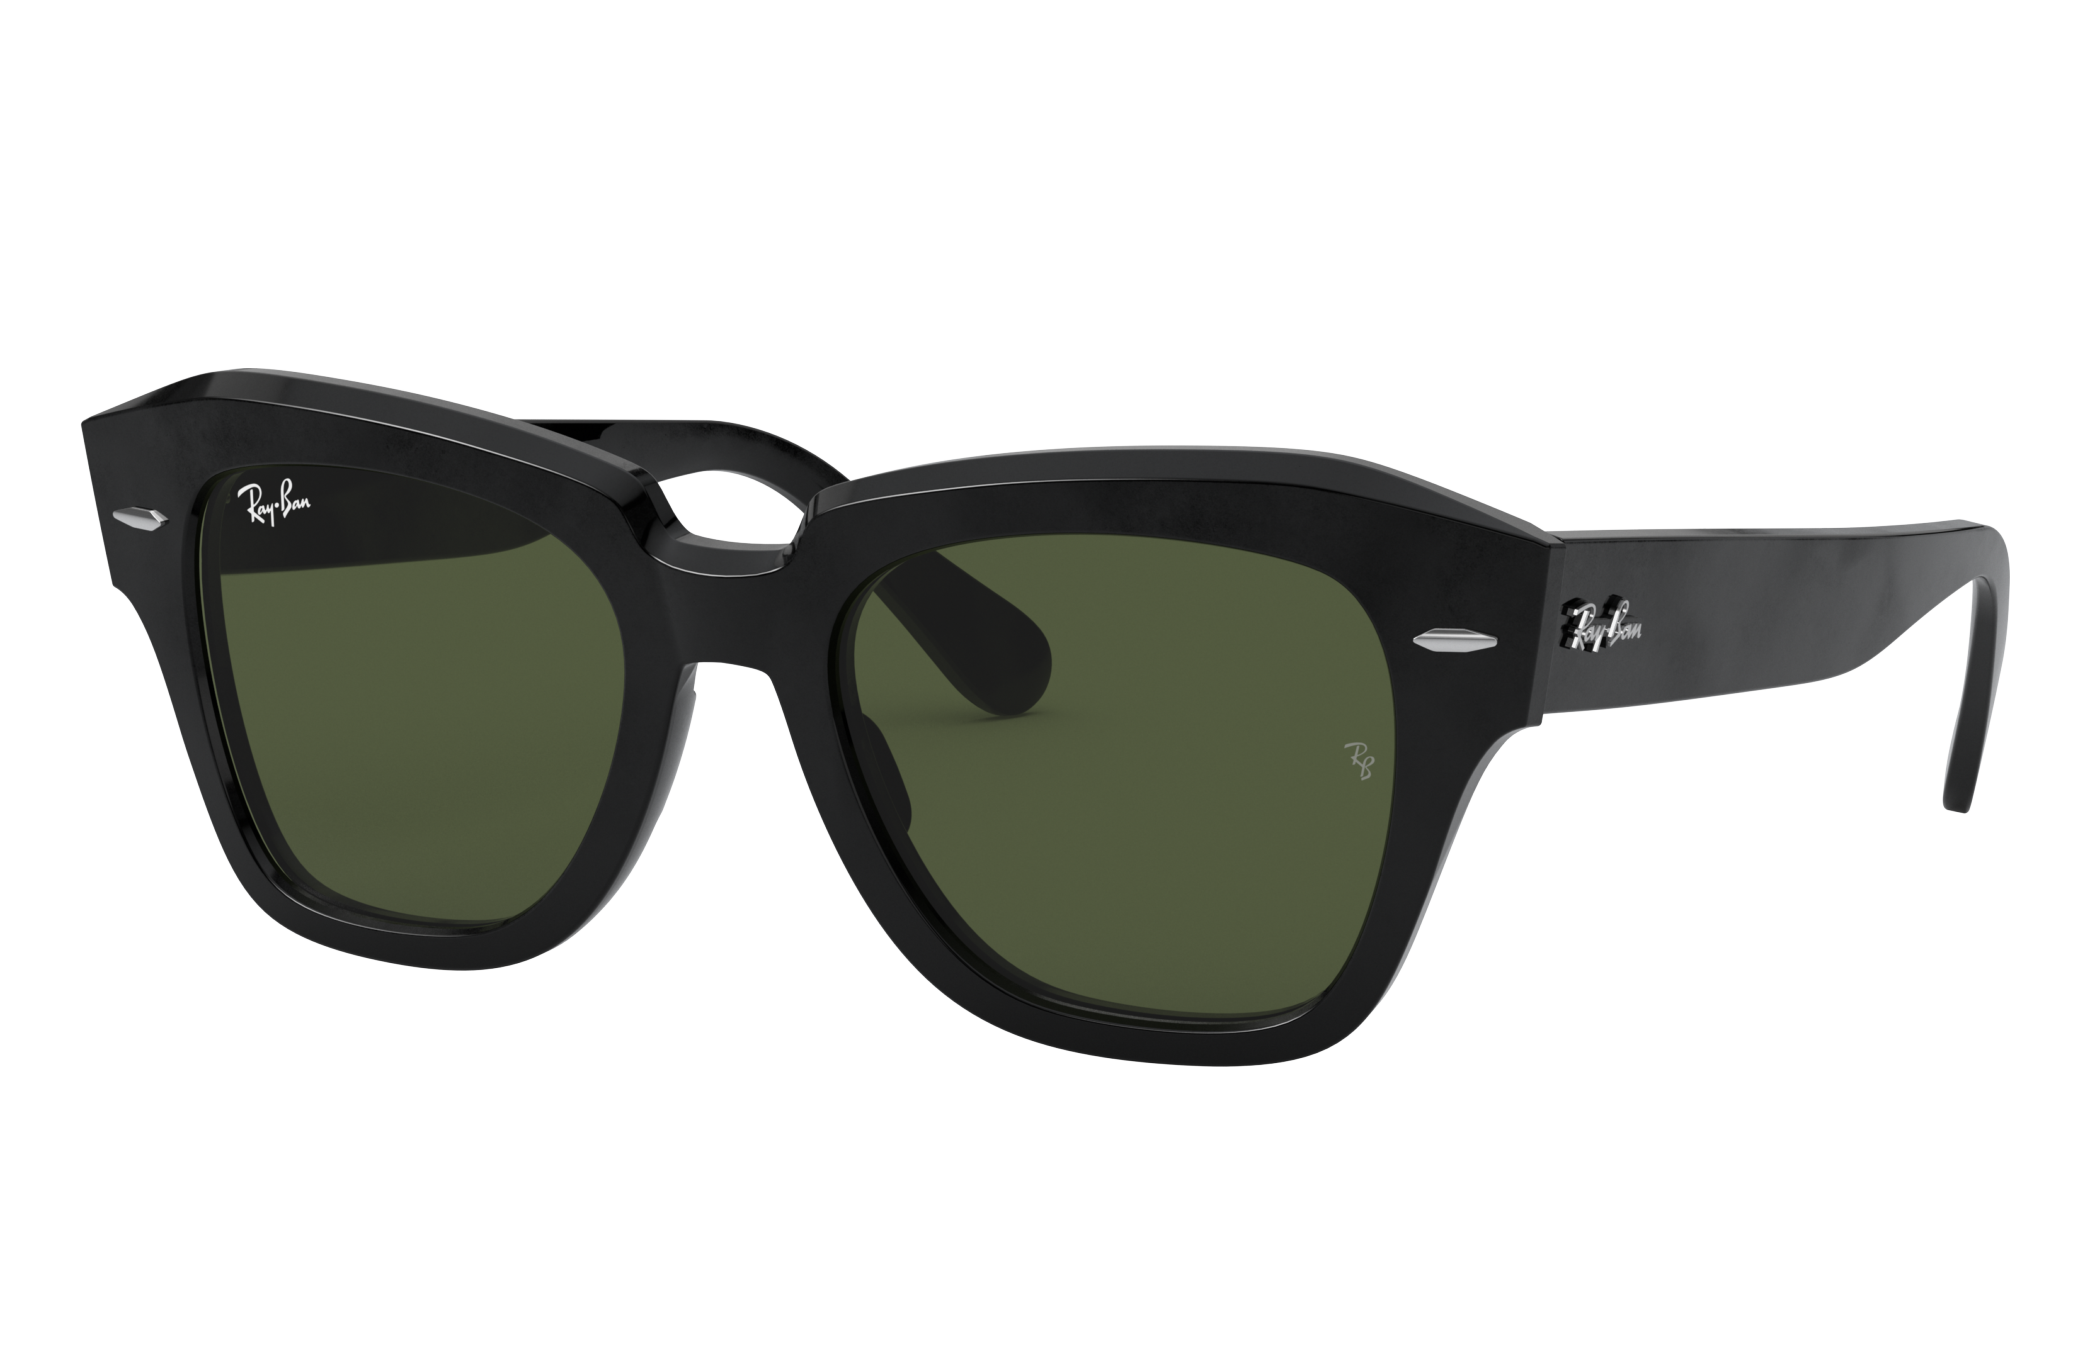 Accessoires Zonnebrillen & Eyewear Zonnebrillen Black State Street Ray Ban Sunglasses 